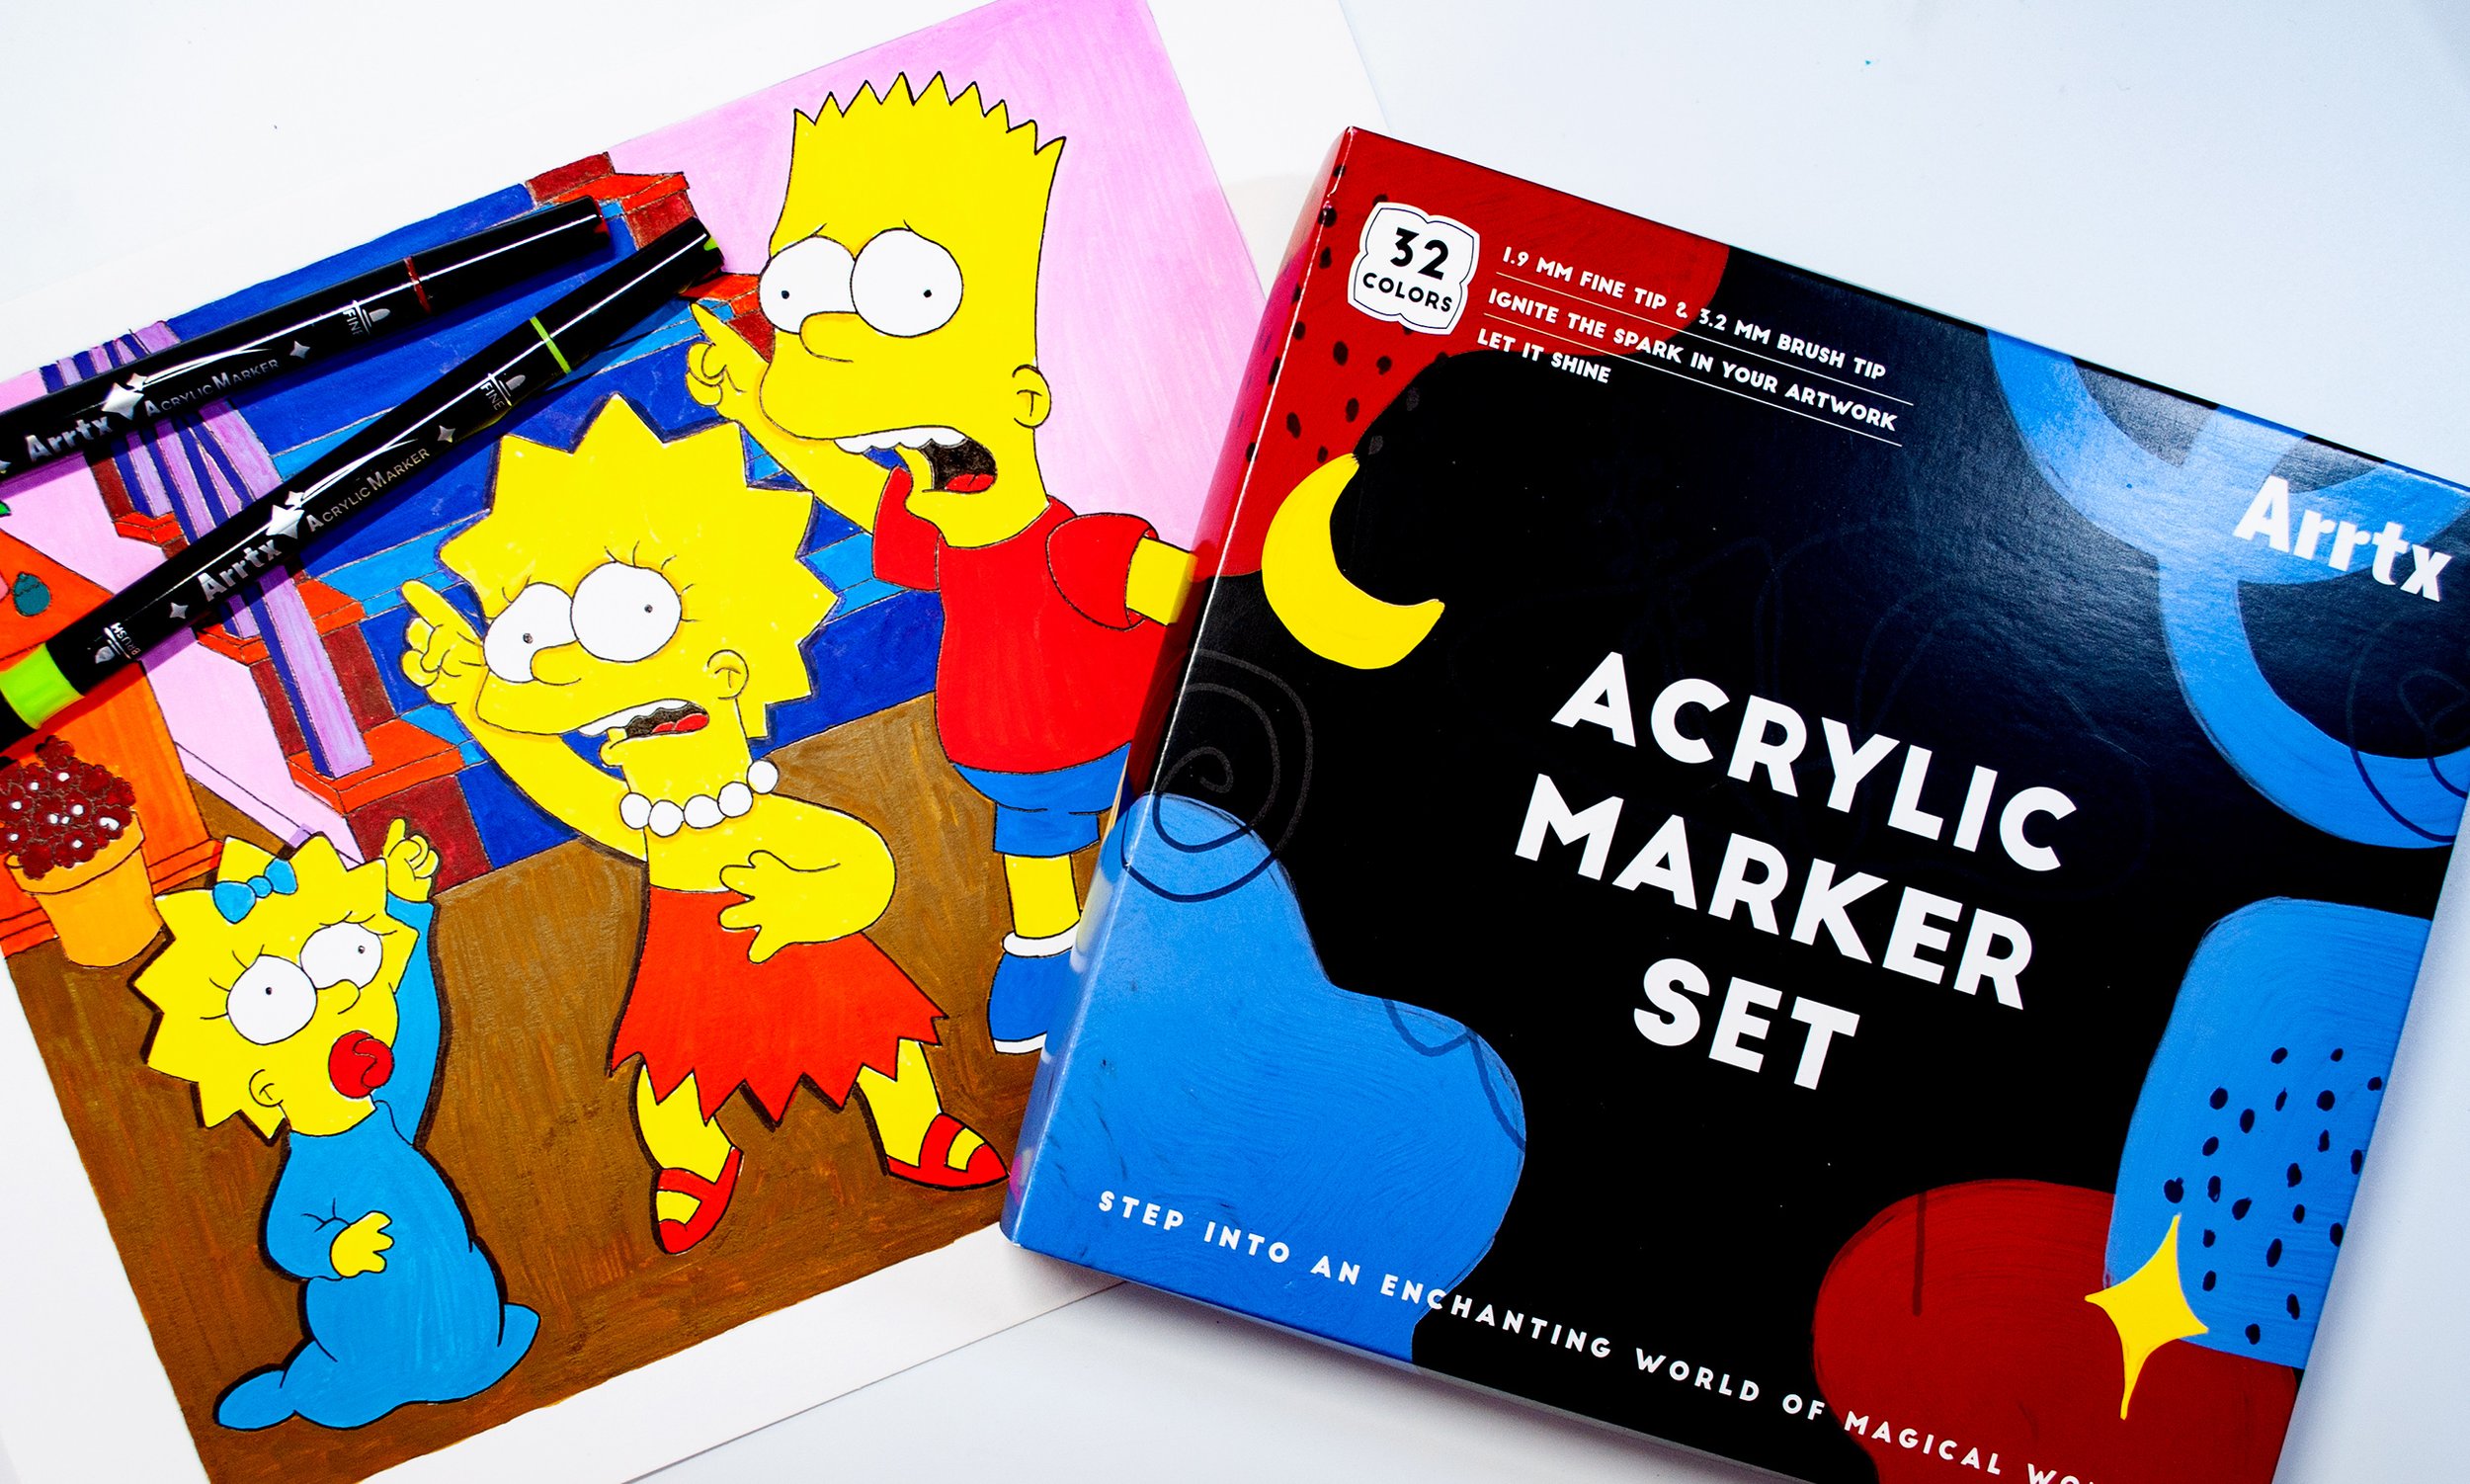 Arrtx] Acrylic Marker 24 Color Set